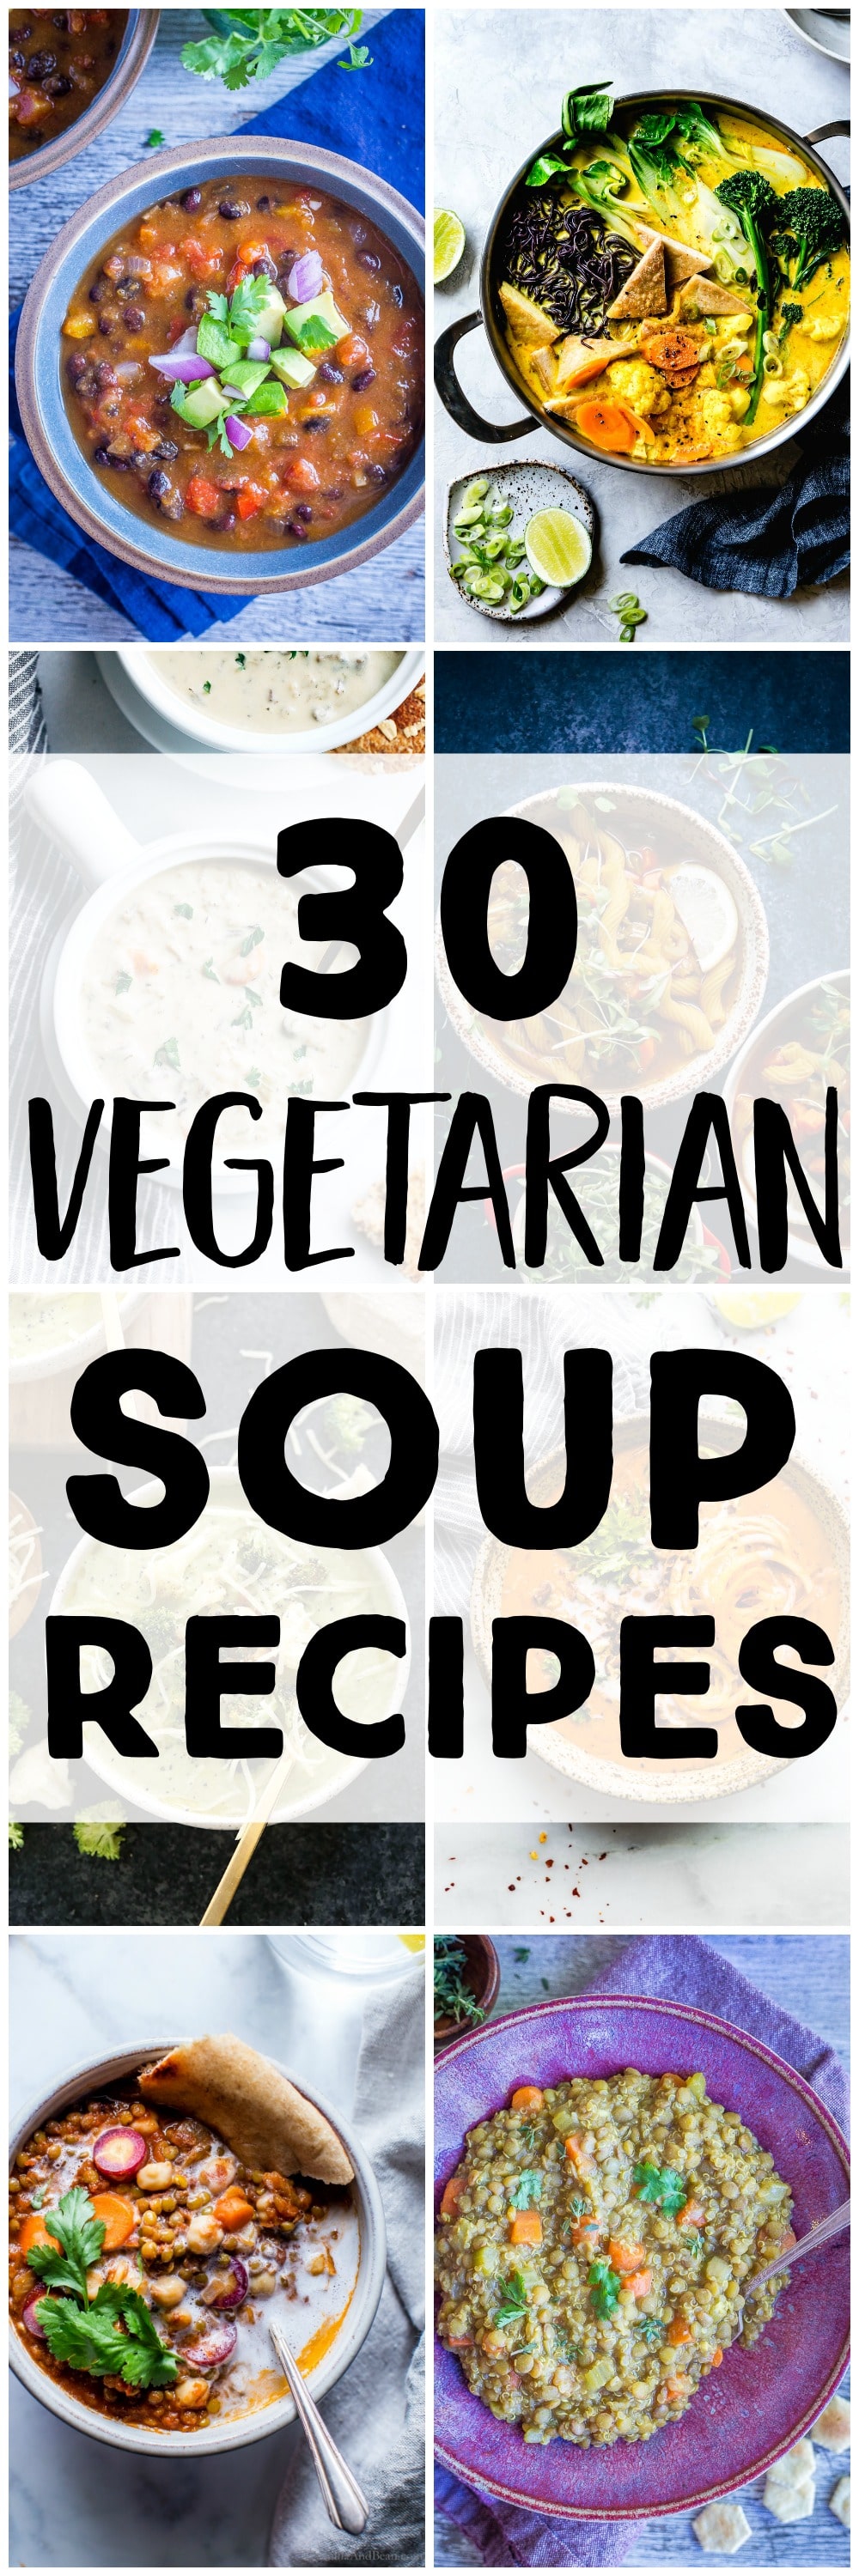 30 Vegetarian Soup Recipes - She Likes Food